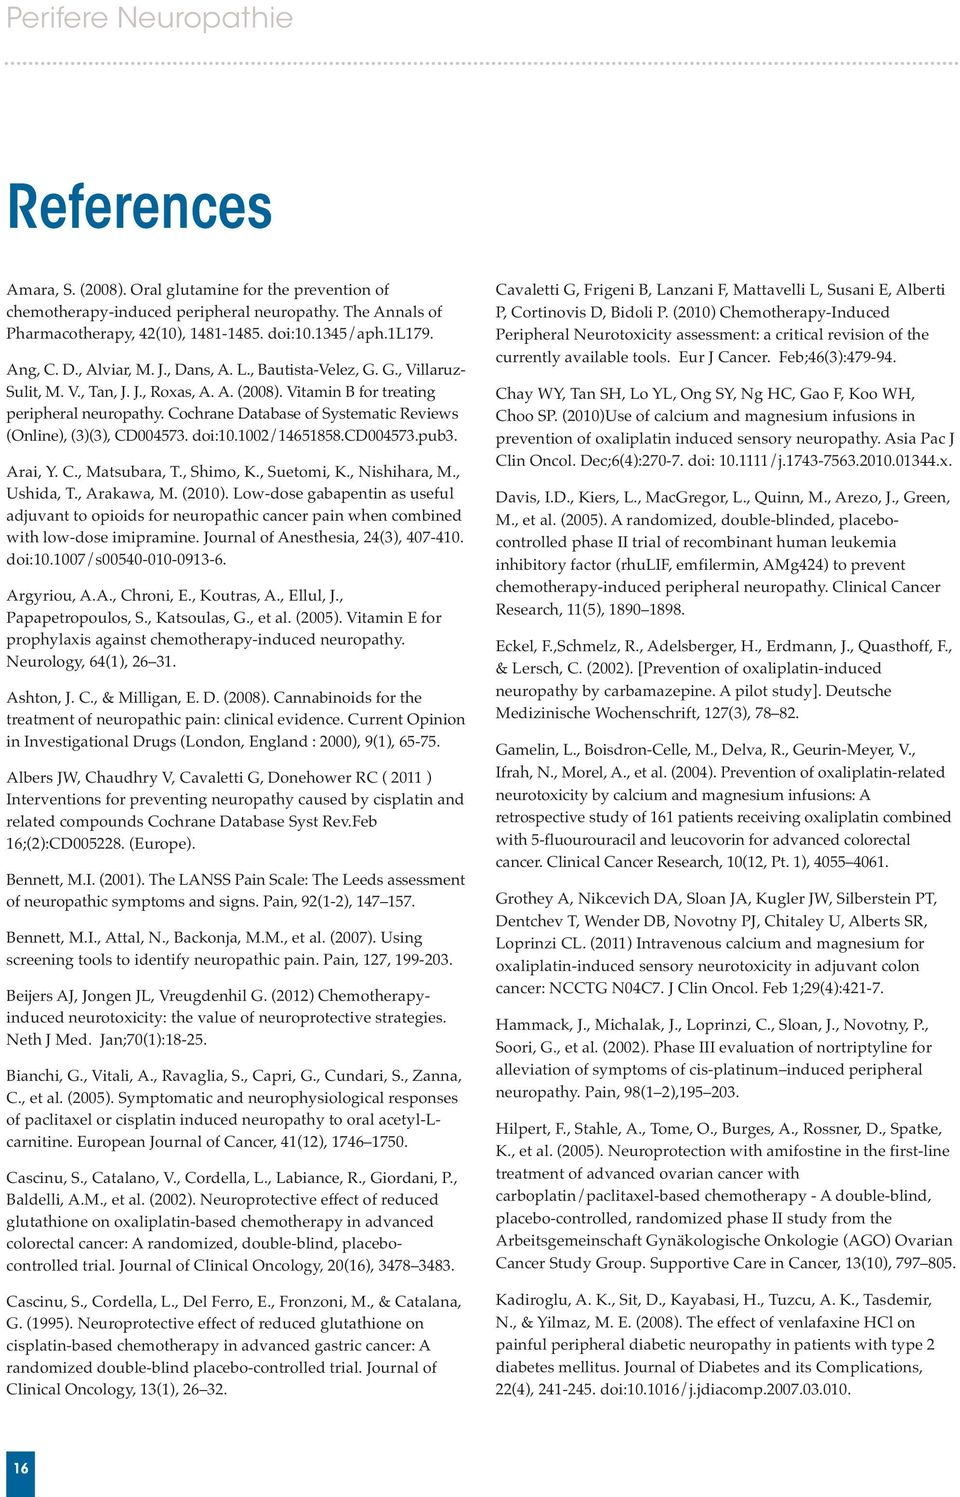 Cochrane Database of Systematic Reviews (Online), (3)(3), CD004573. doi:10.1002/14651858.cd004573.pub3. Arai, Y. C., Matsubara, T., Shimo, K., Suetomi, K., Nishihara, M., Ushida, T., Arakawa, M.